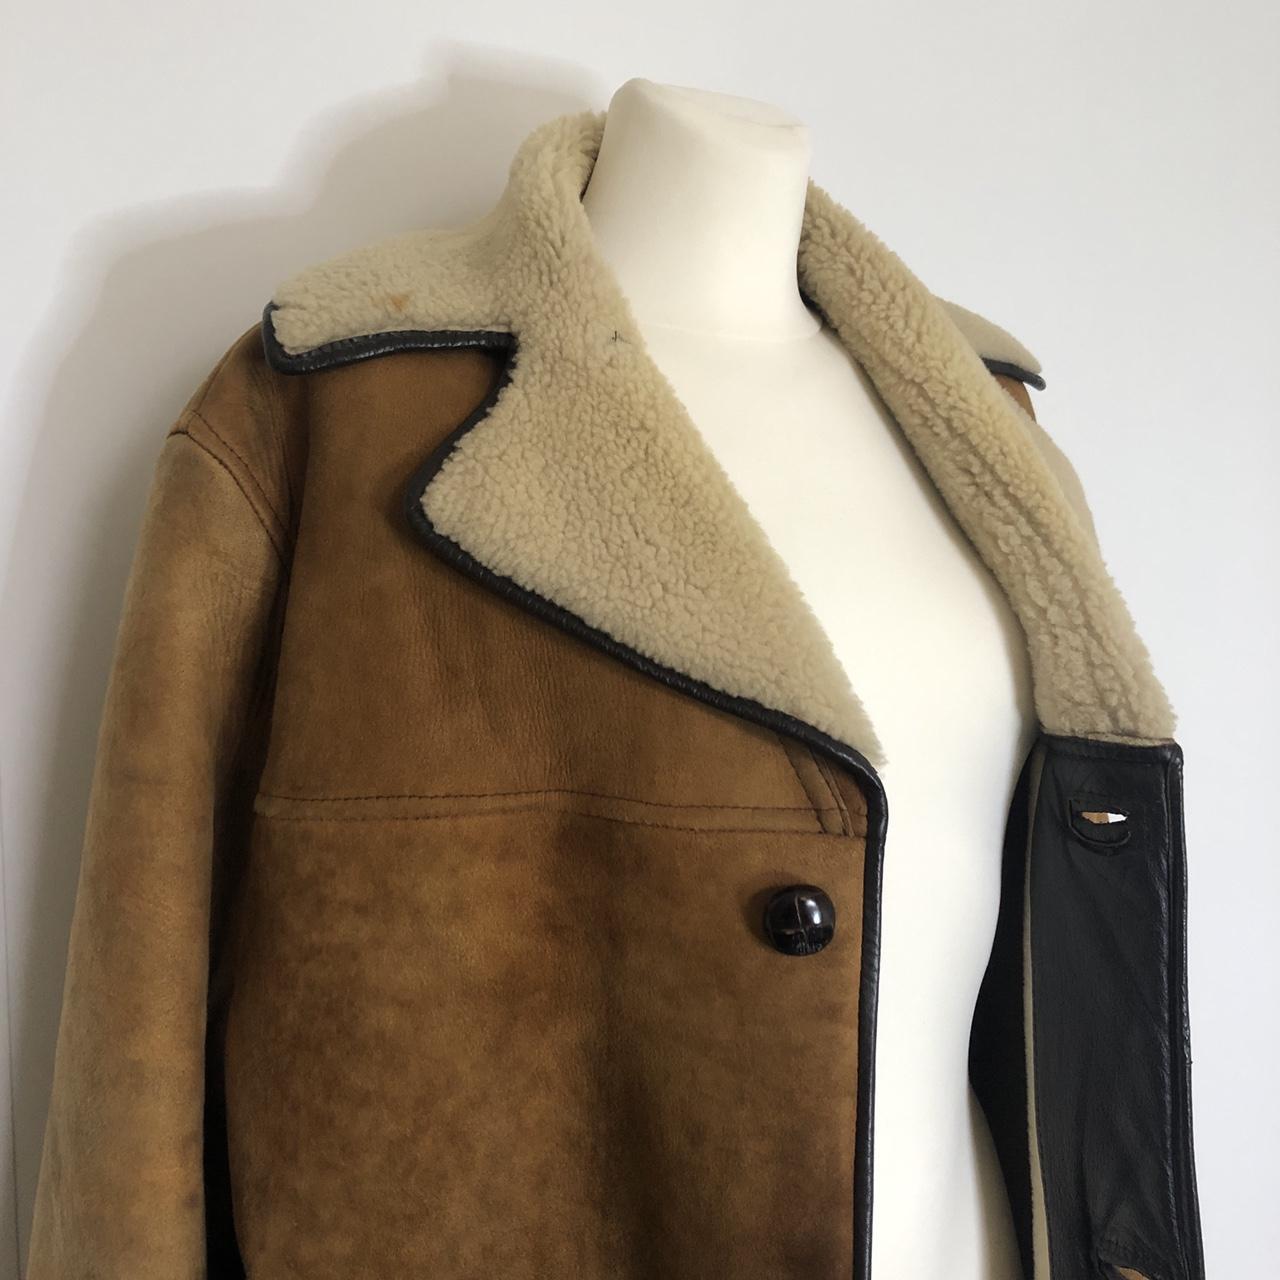 Vintage tan suede shearling coat. Featuring large... - Depop